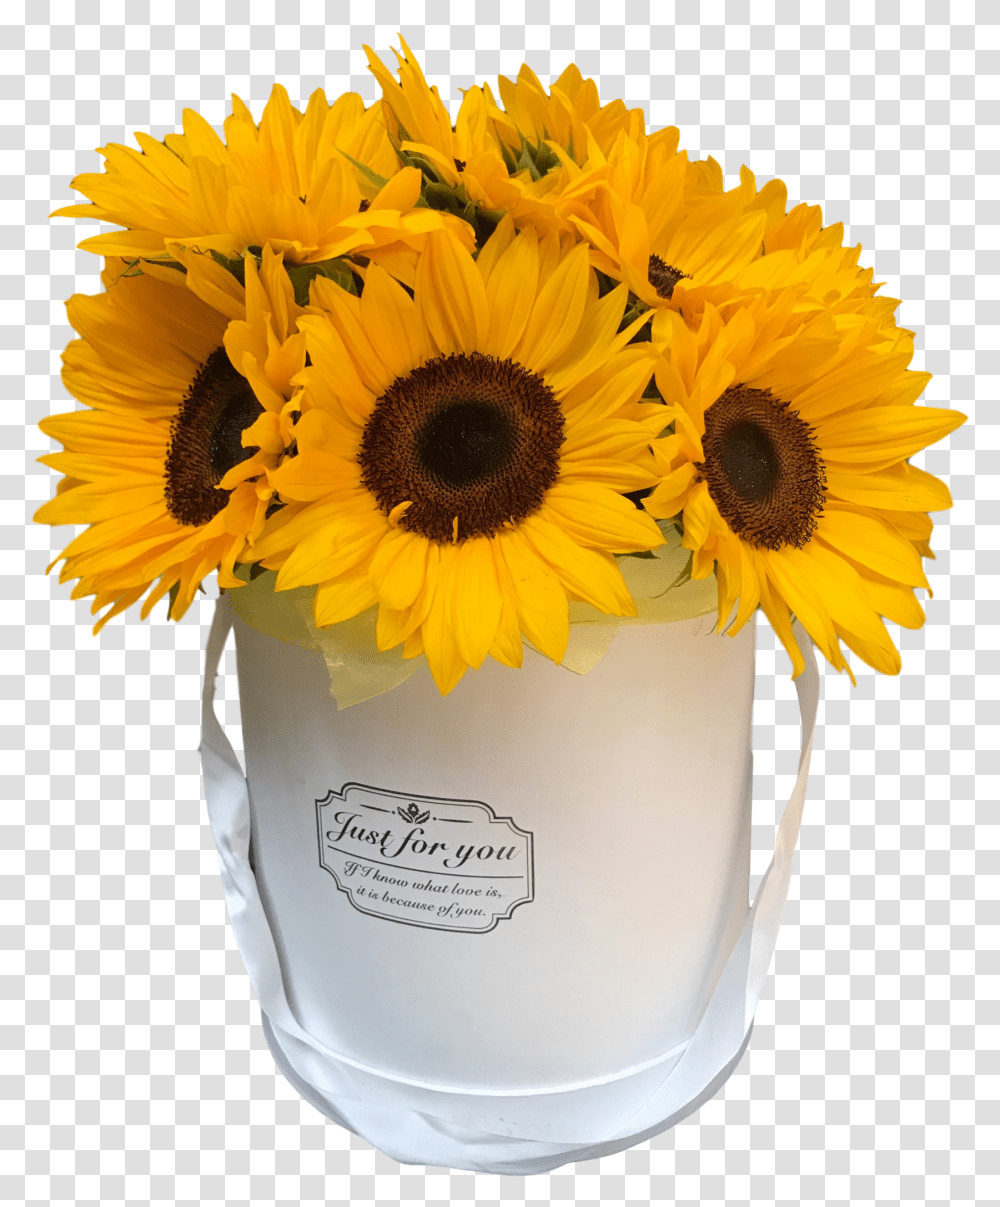 Sunflower Image Hd Real Sunflowers In A Box, Plant, Blossom, Flower Arrangement, Flower Bouquet Transparent Png